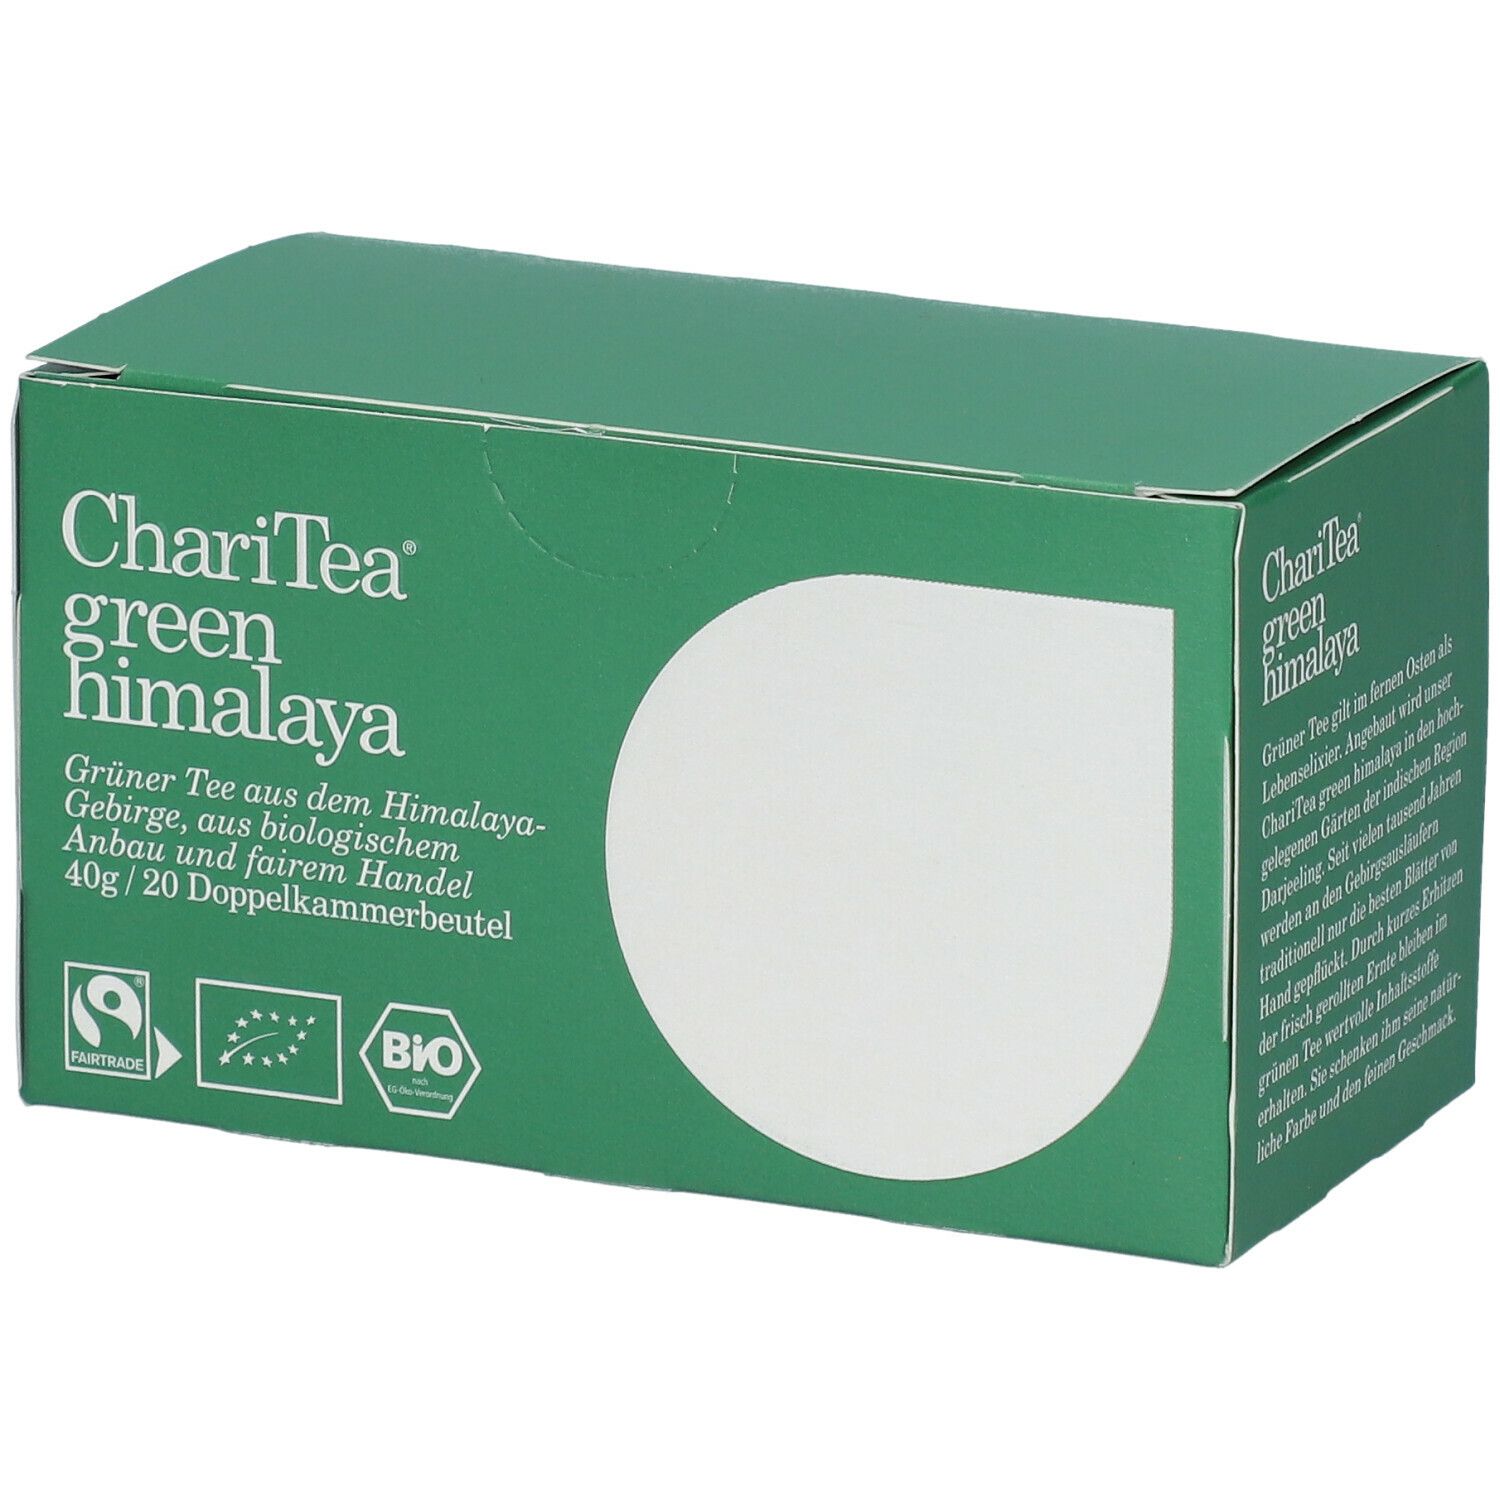 Image of ChariTea® green himalaya